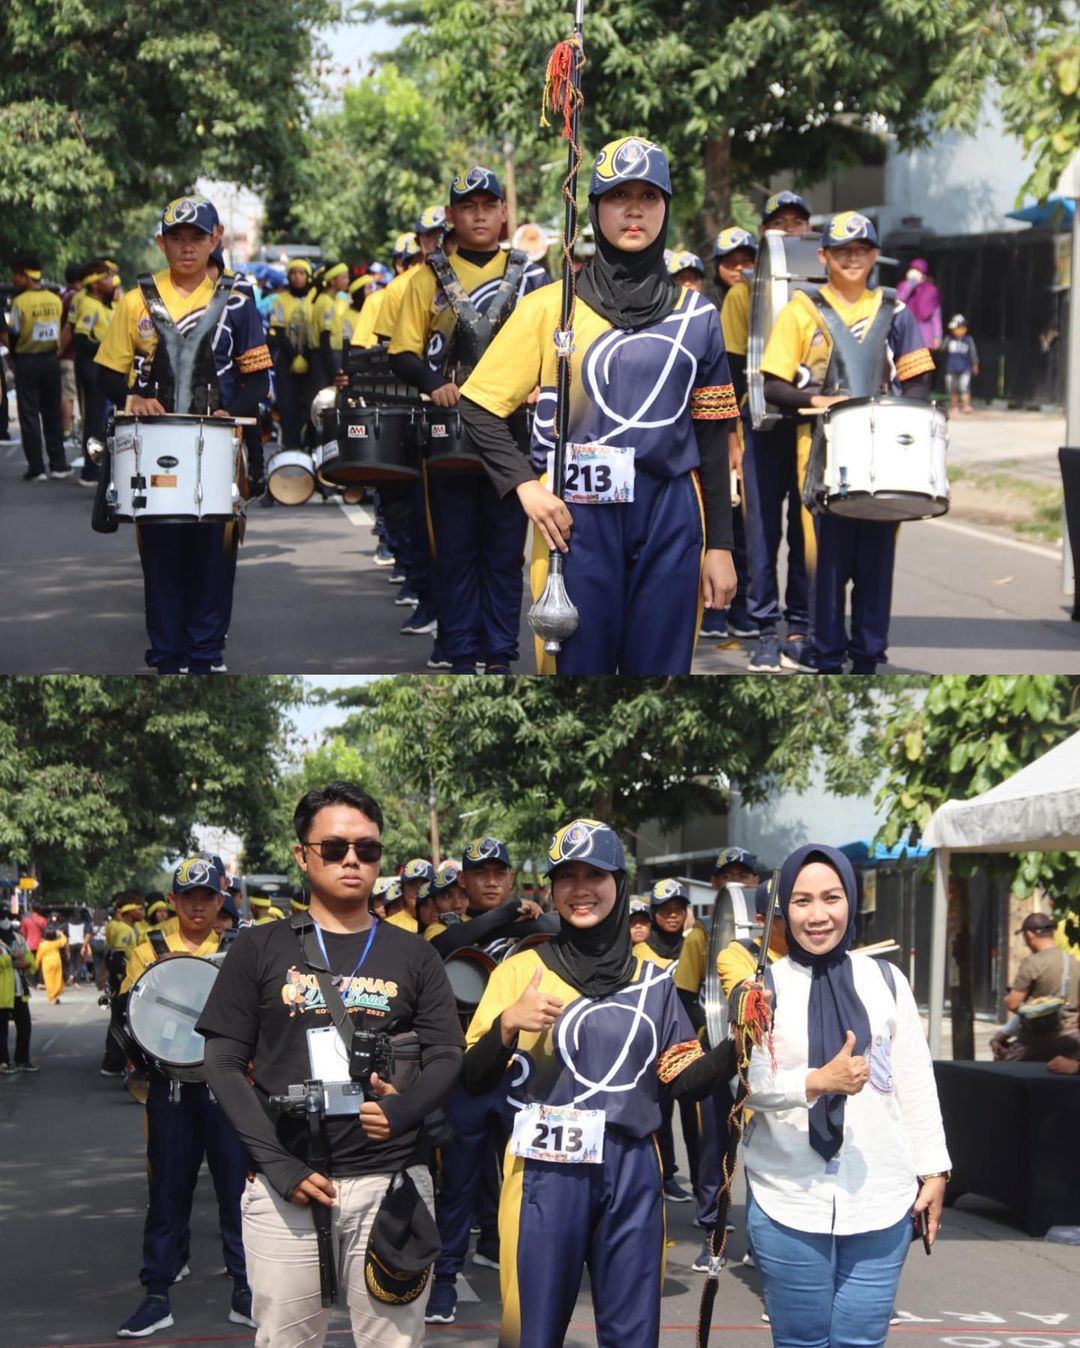 Drumband Lampung Raih Medali Emas di Kejurnas Drumband Madiun